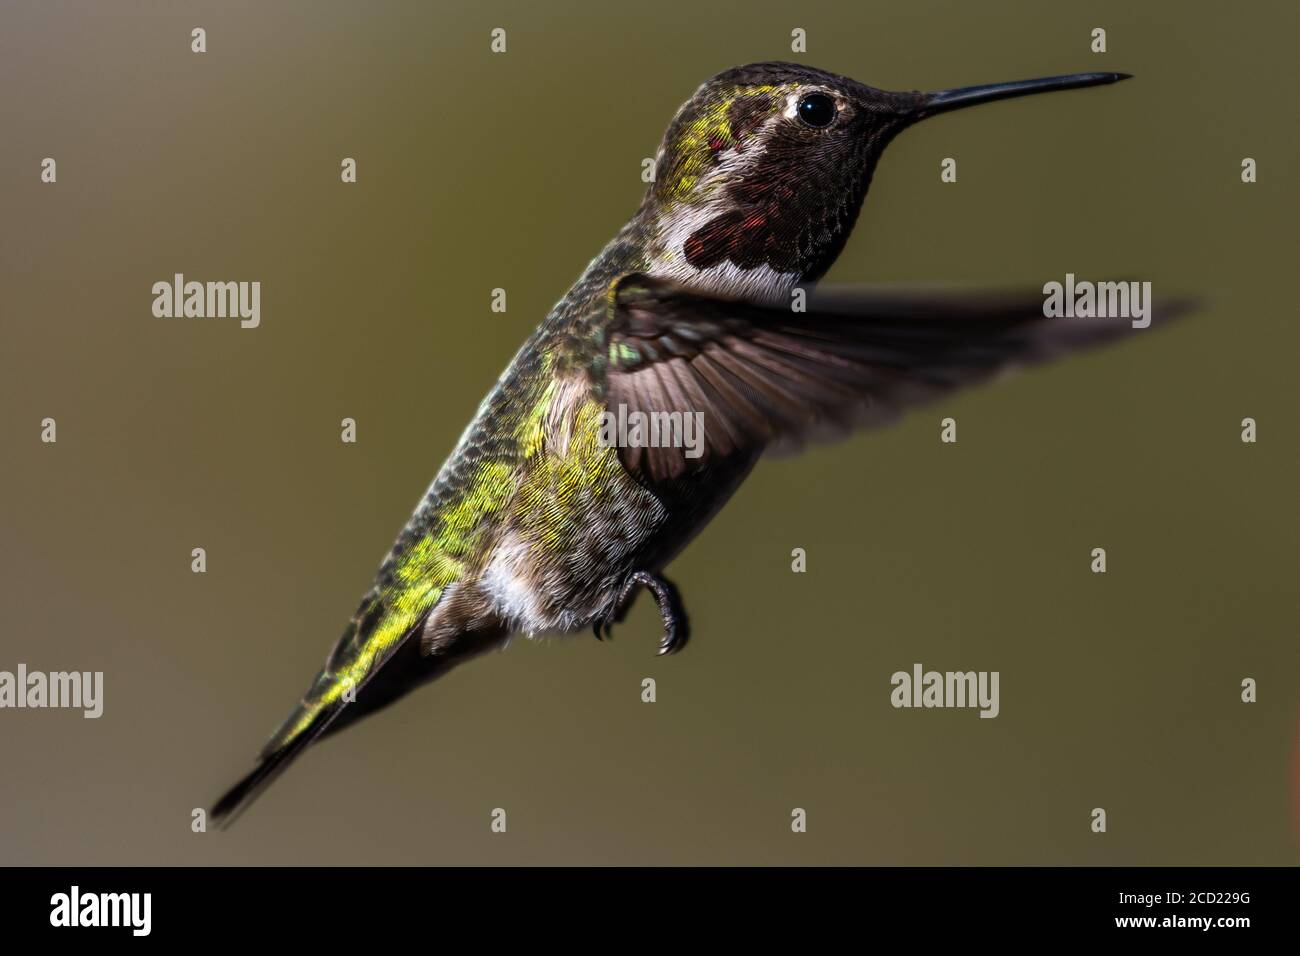 Hummingbird flying, flapping its wings in flight. Oregon, Ashland, Cascade Siskiyou National Monument, Winter Stock Photo